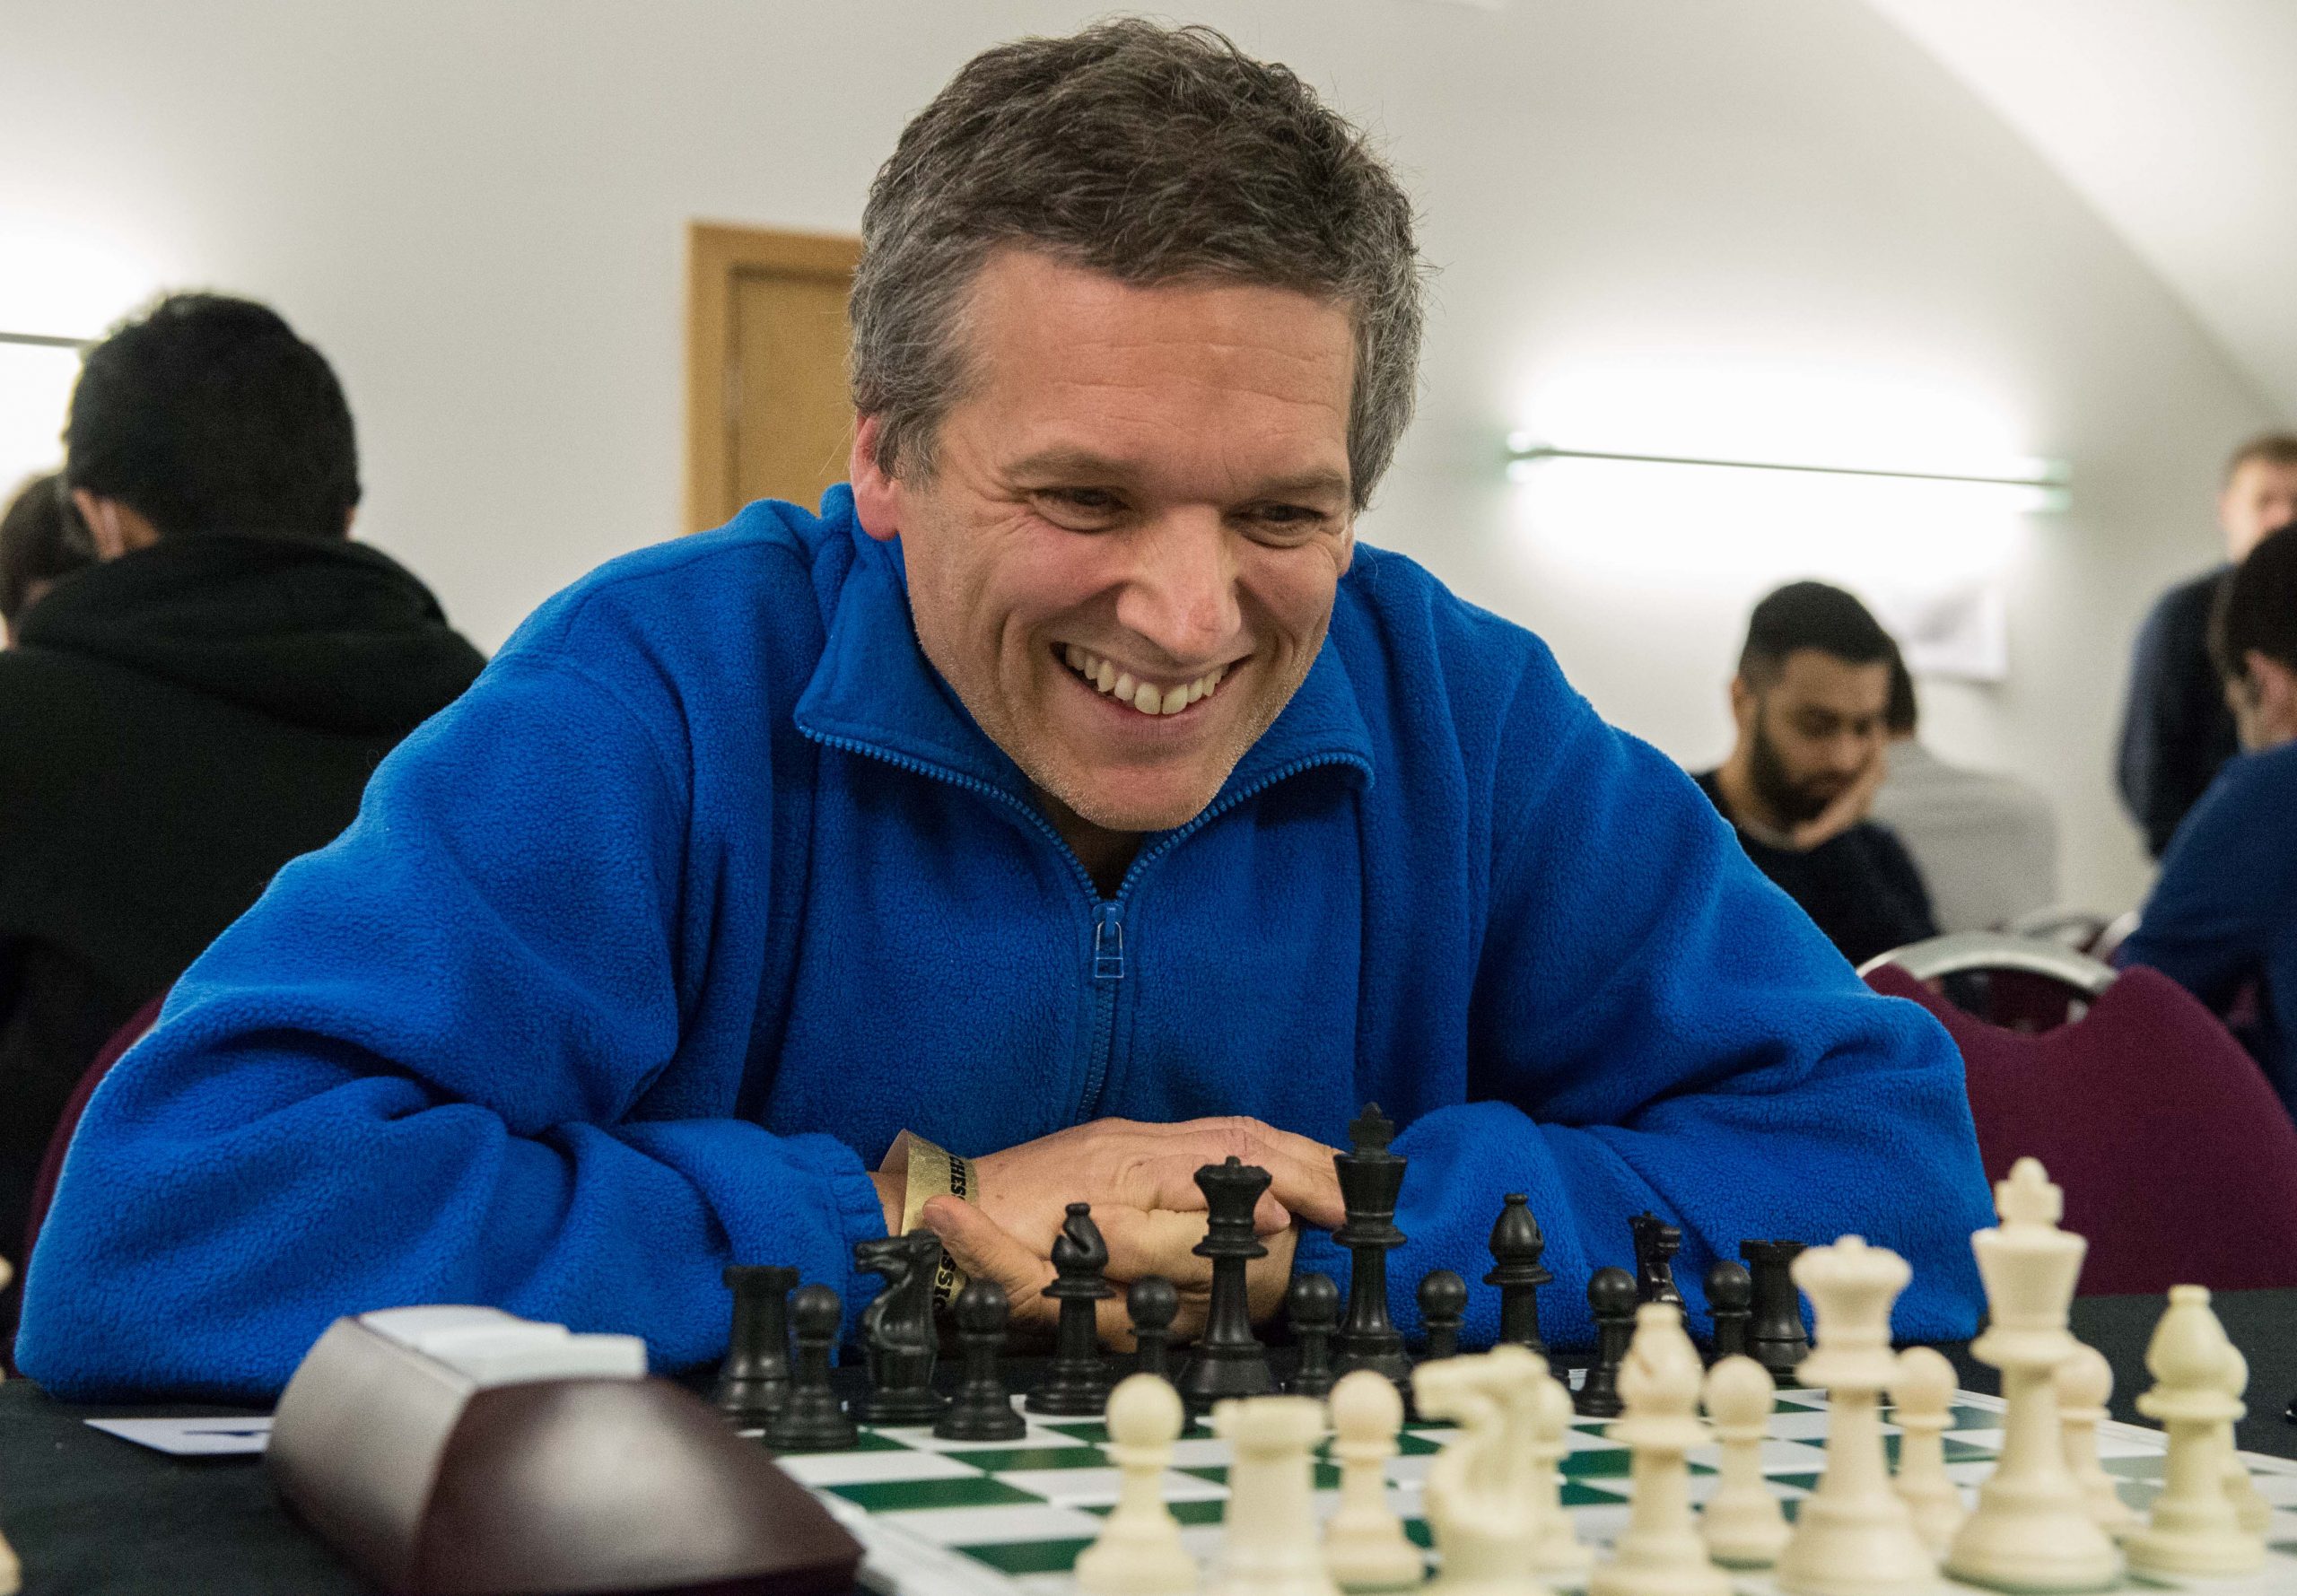 IM Graeme Buckley, London Chess Classic, 2021, courtesy of John Upham Photography